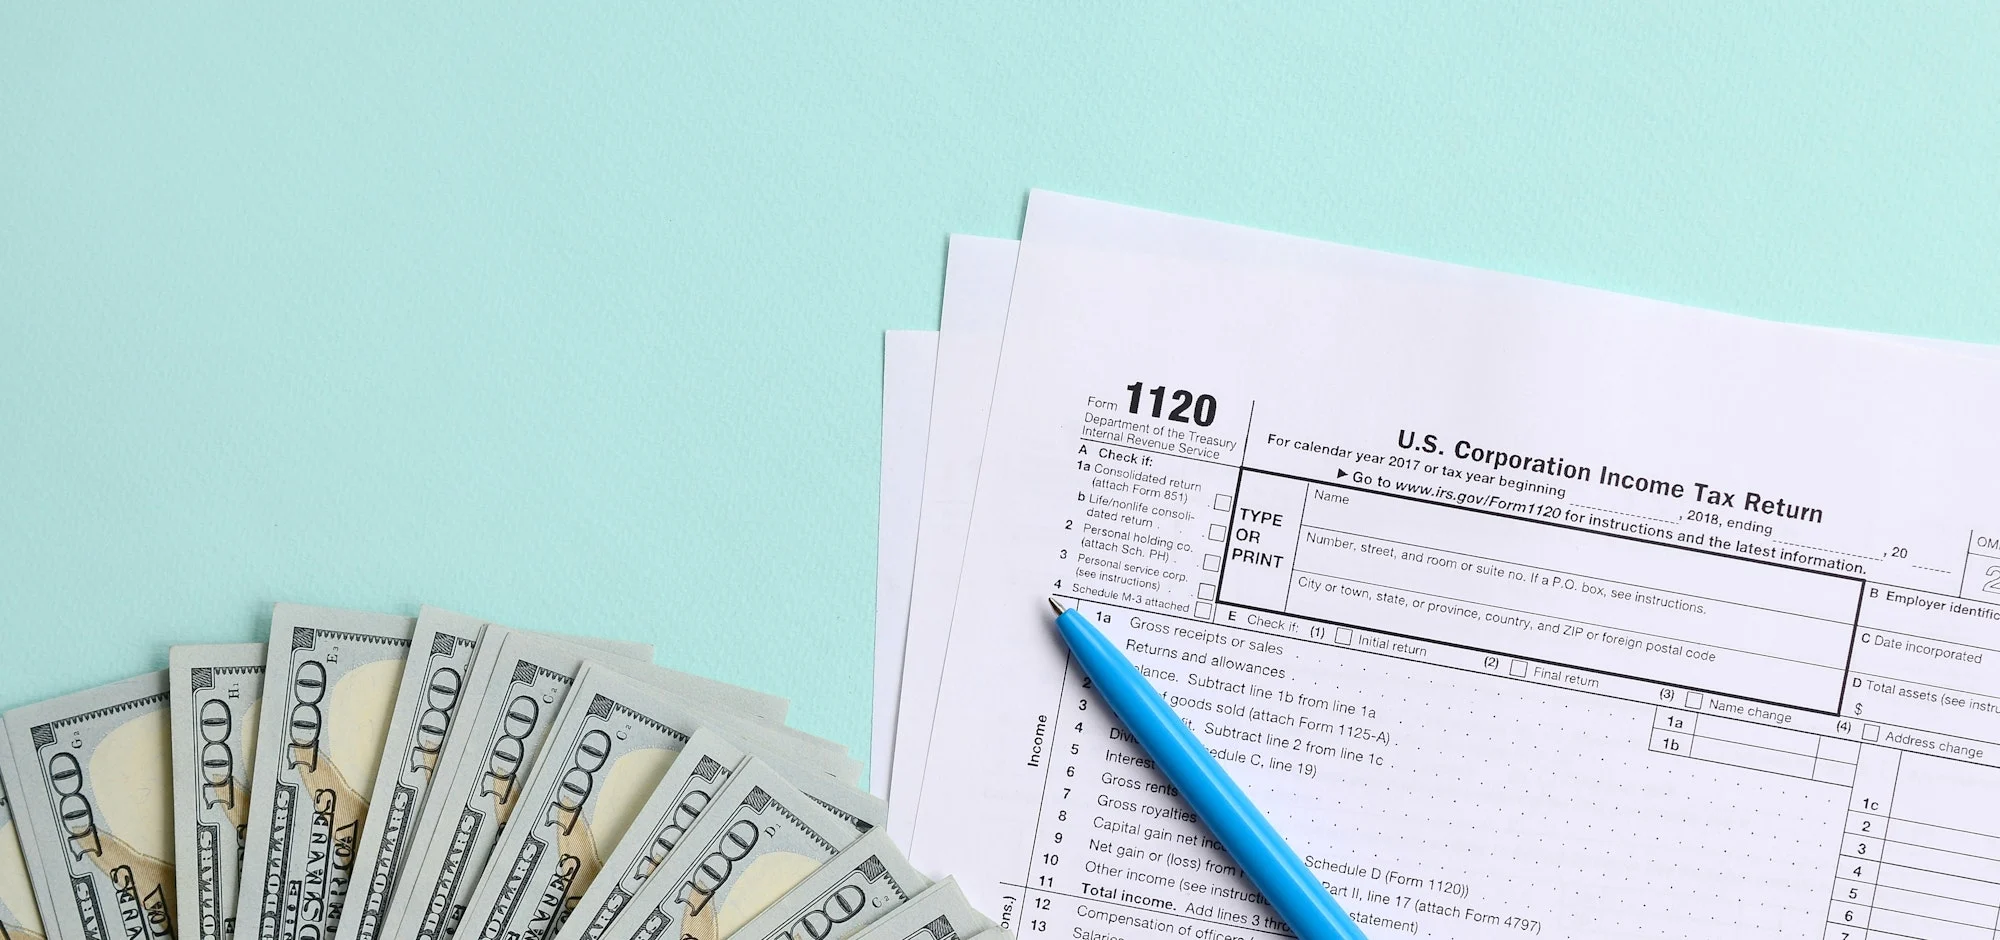 1120 tax form lies near hundred dollar bills and blue pen on a light blue background